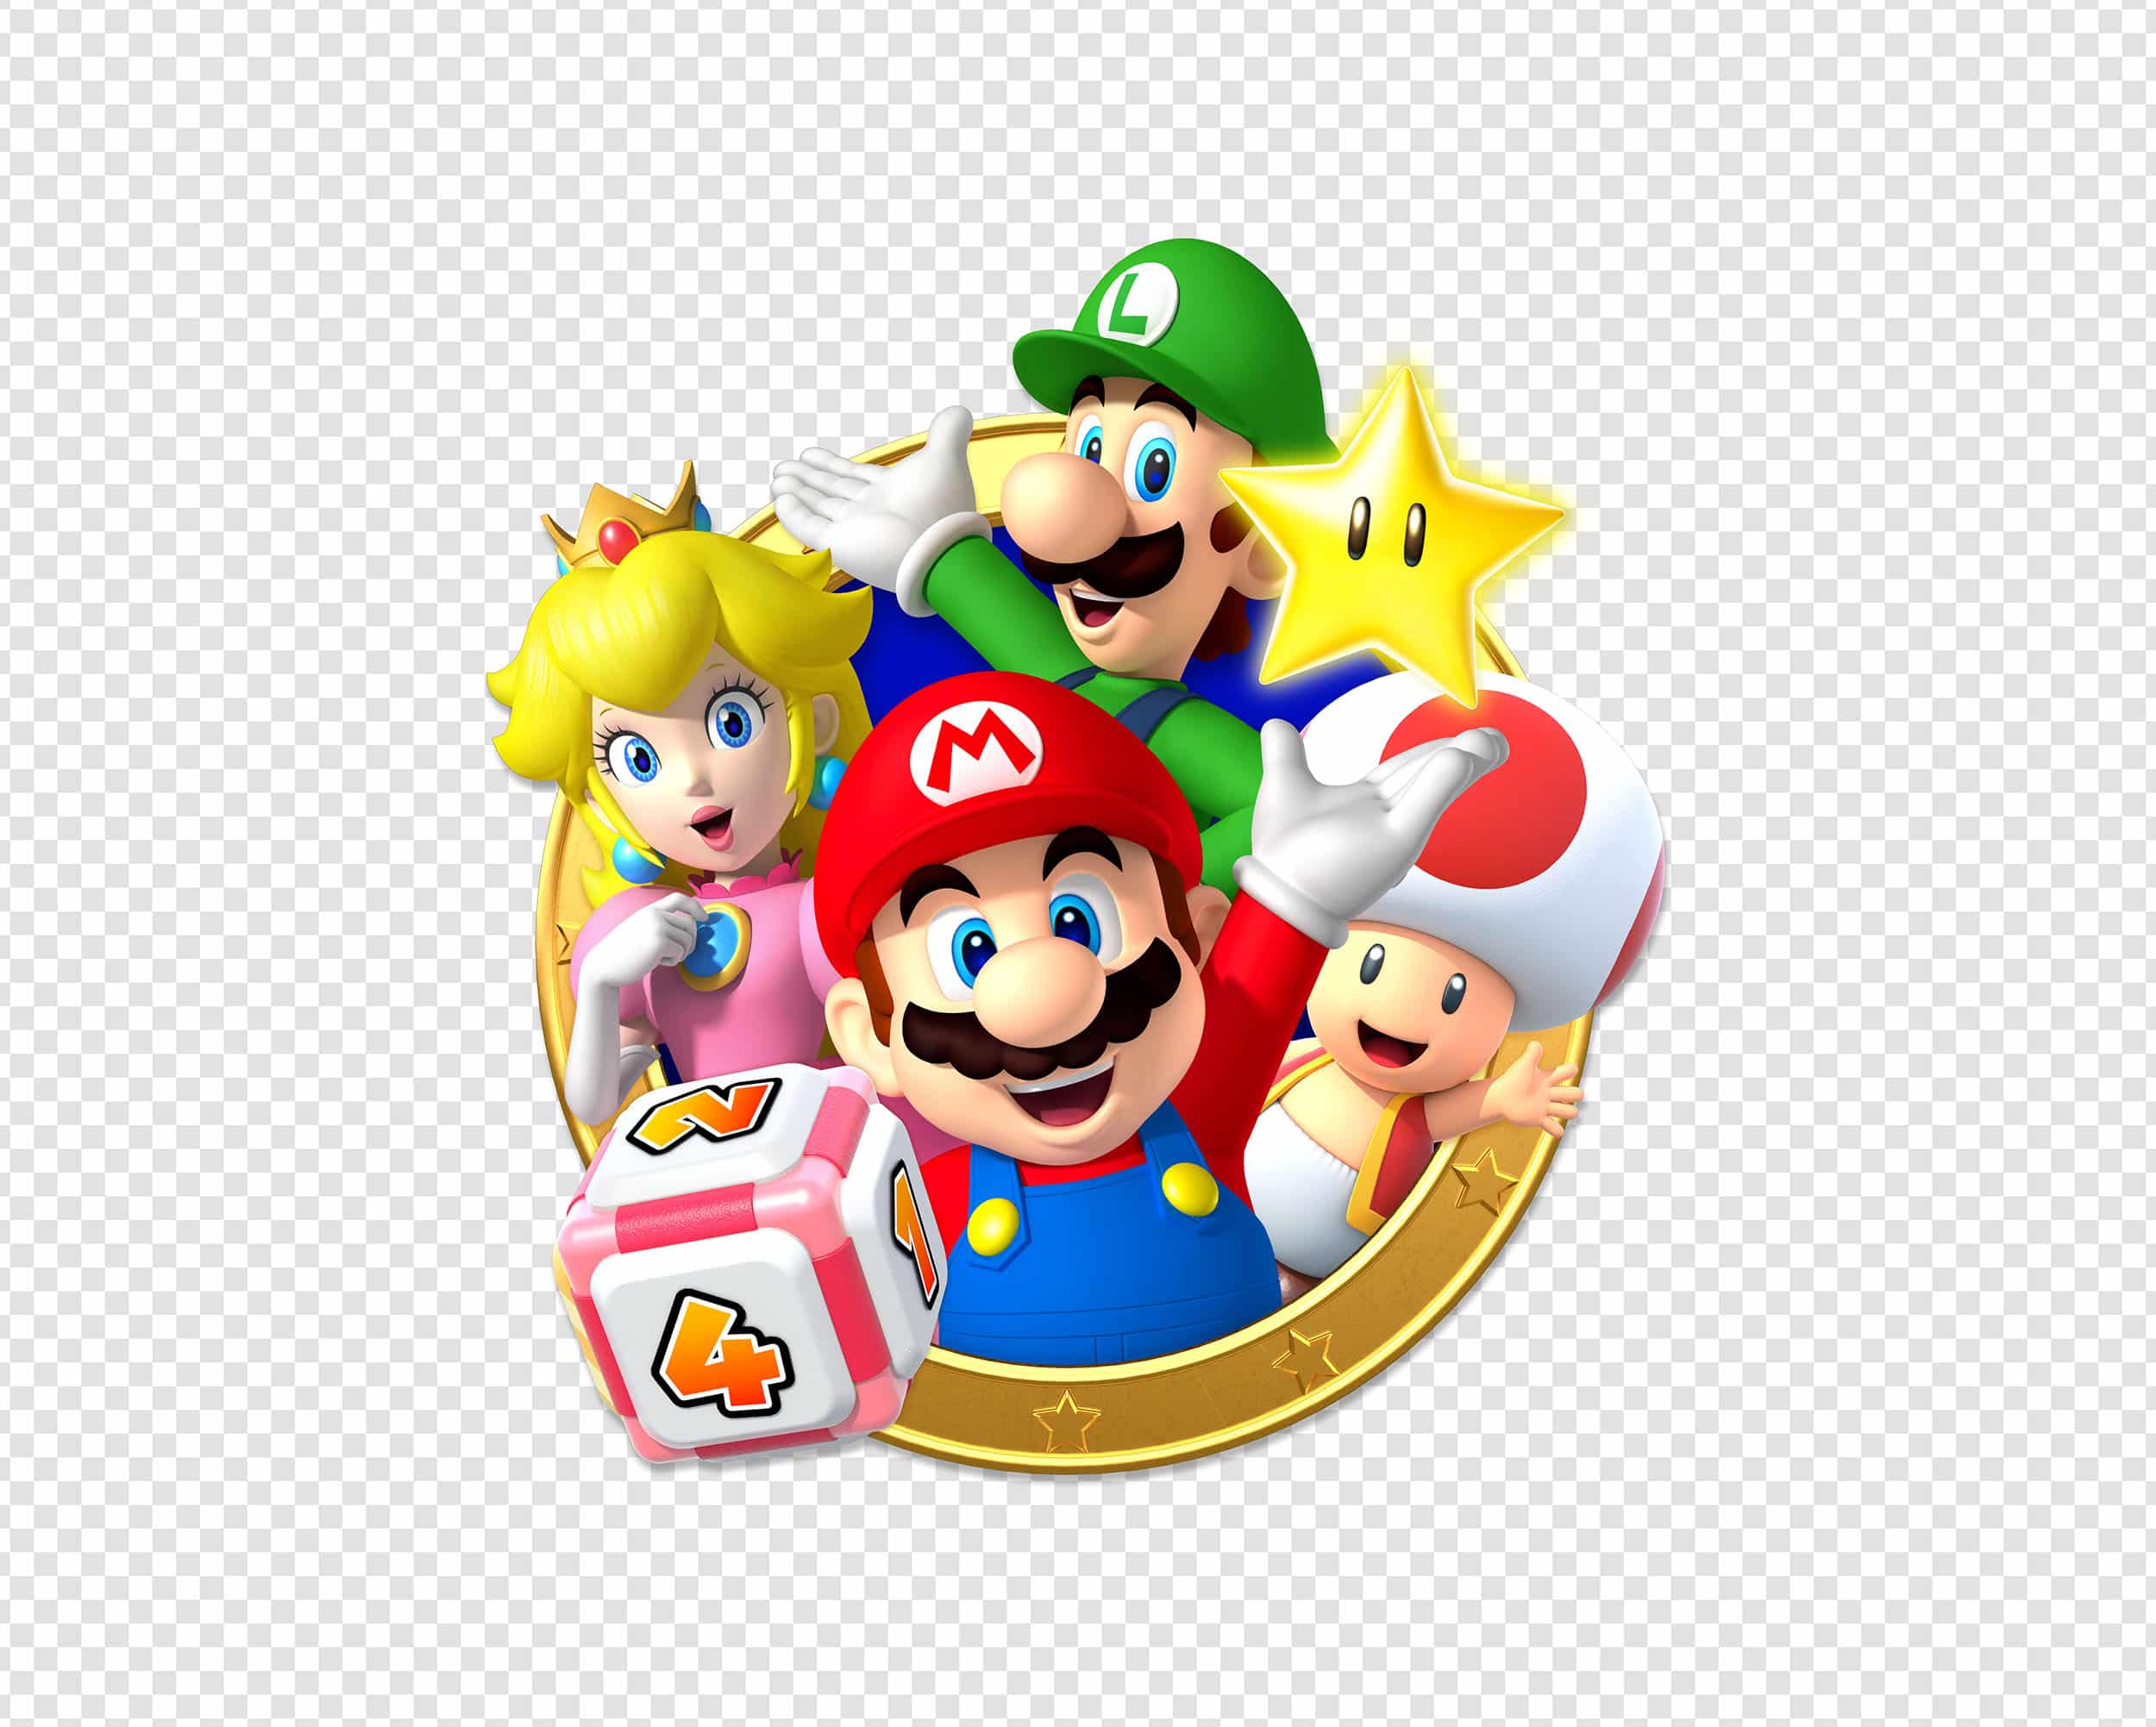 Mario Party: Star Rush Key Art